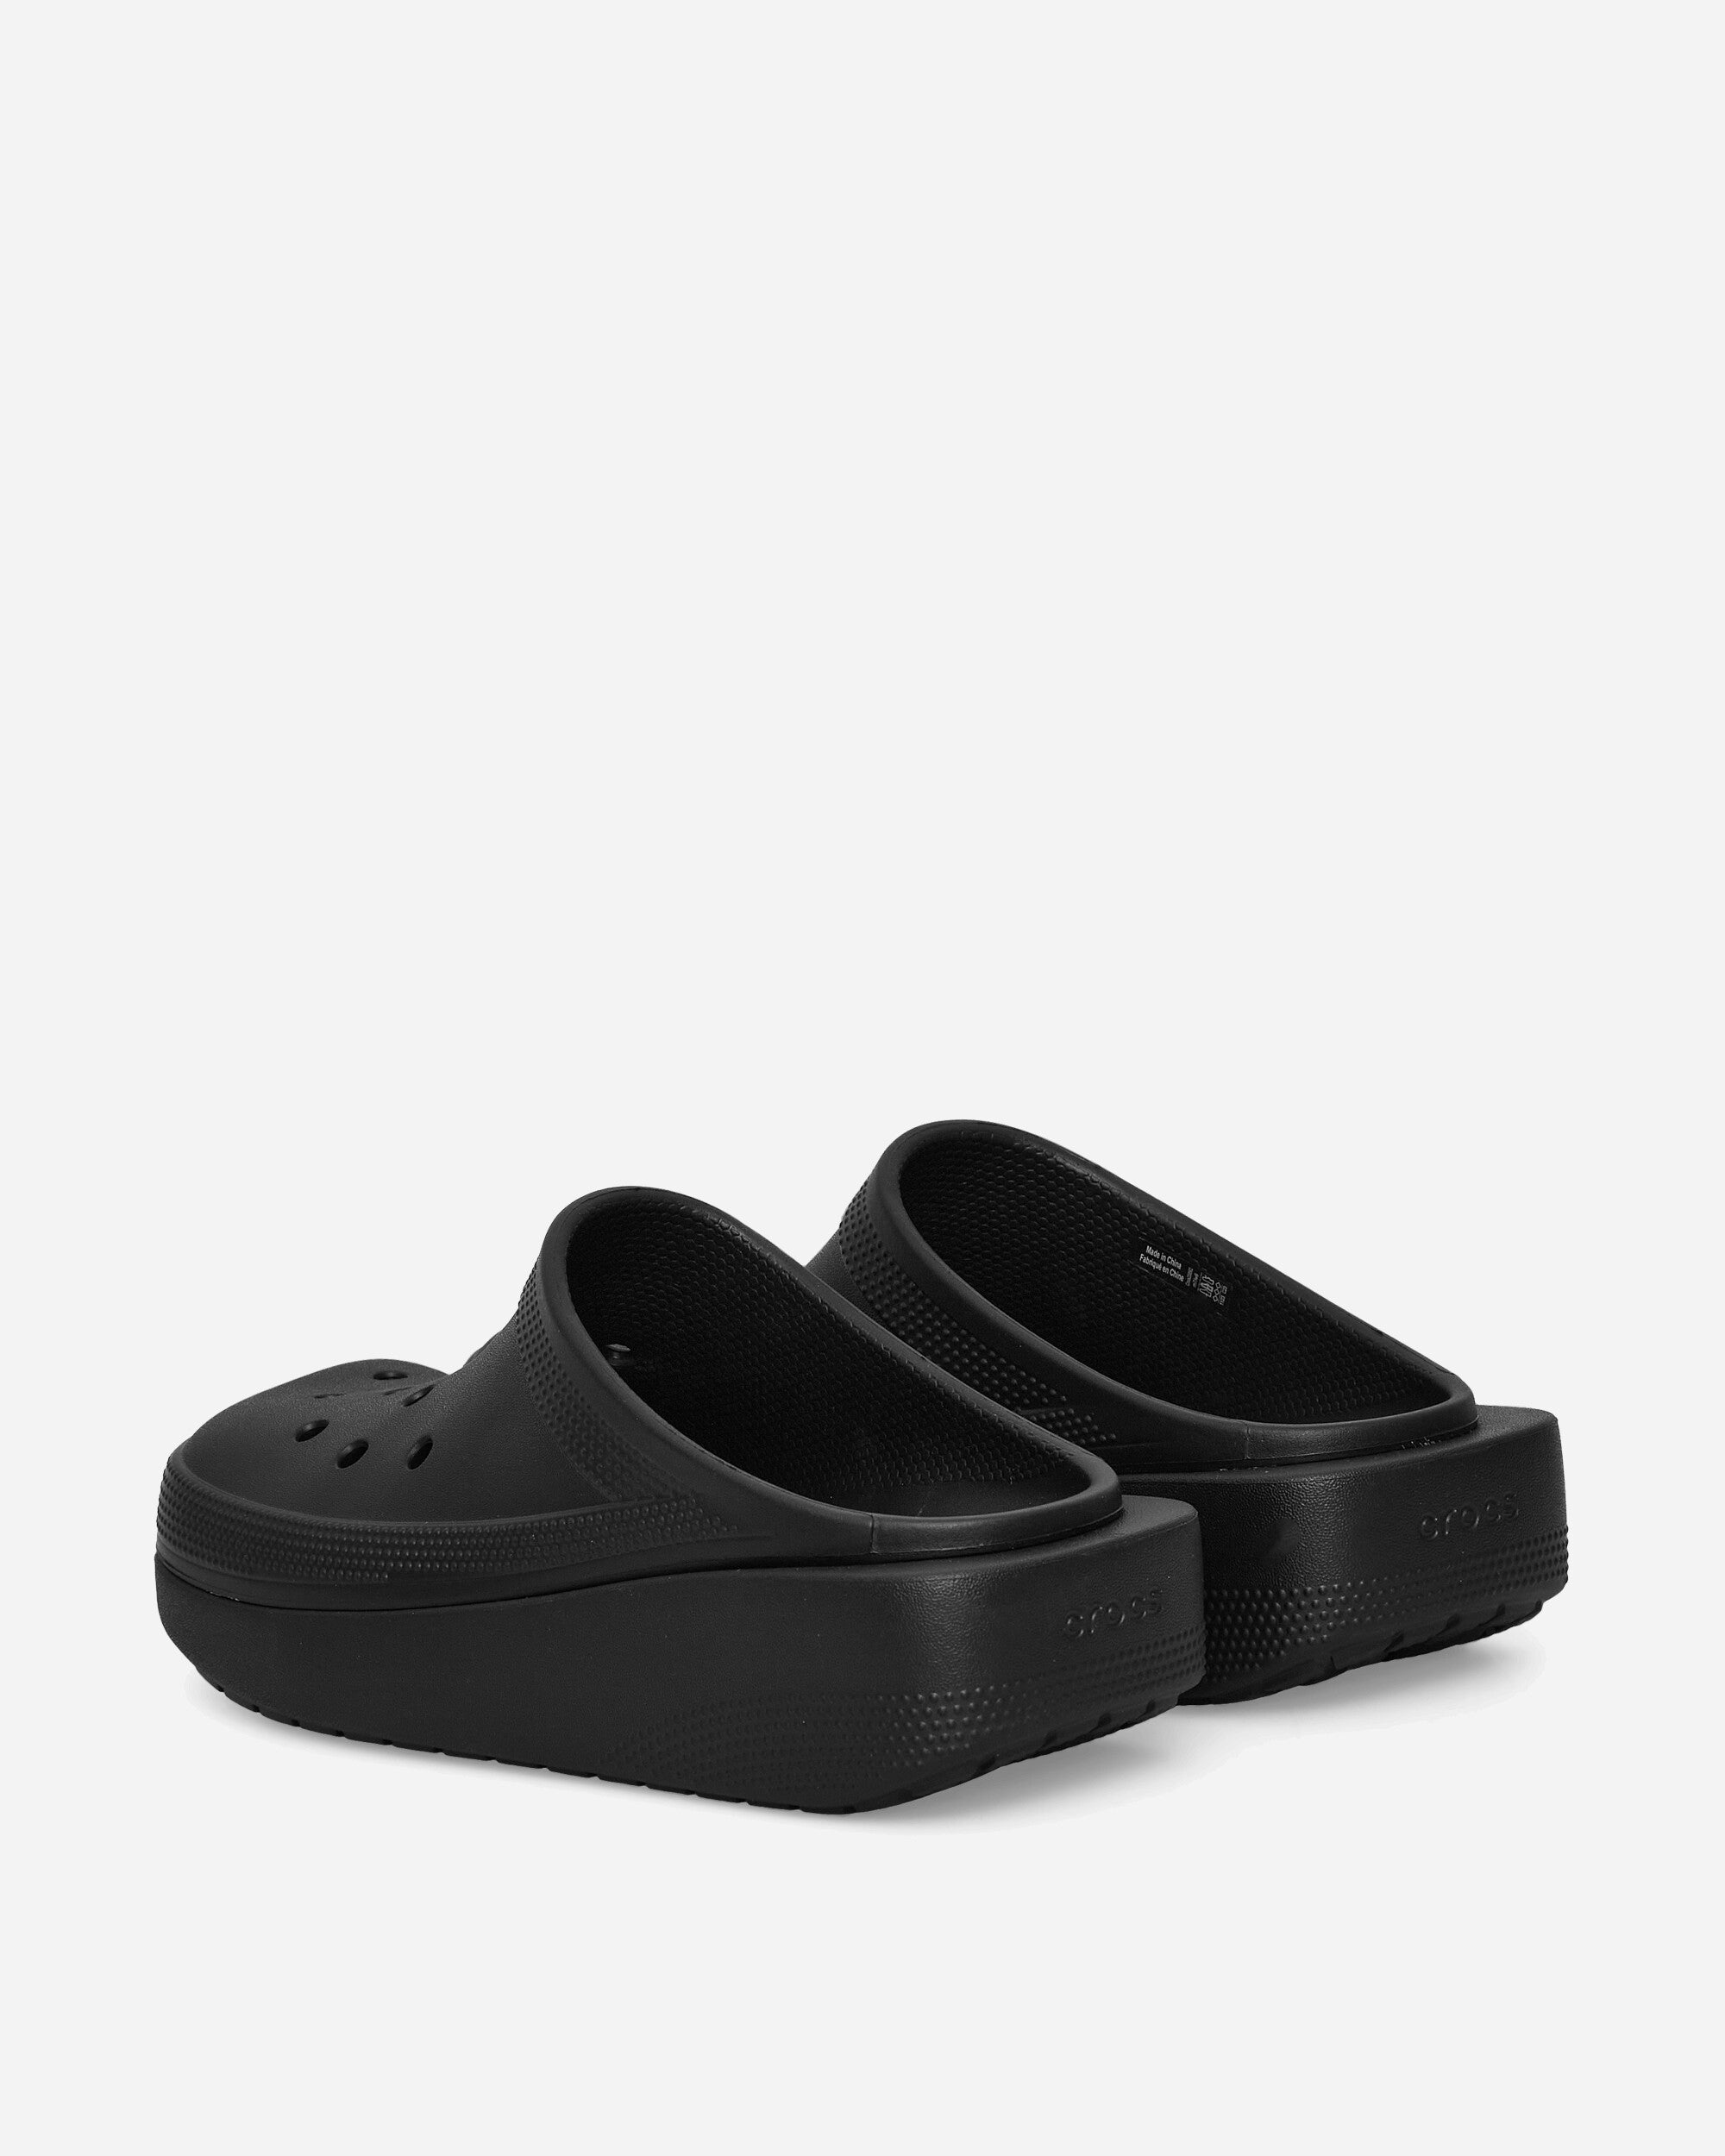 Crocs Classic Blunt Toe Black Sandals and Slides Sandals and Mules 209562W BLK